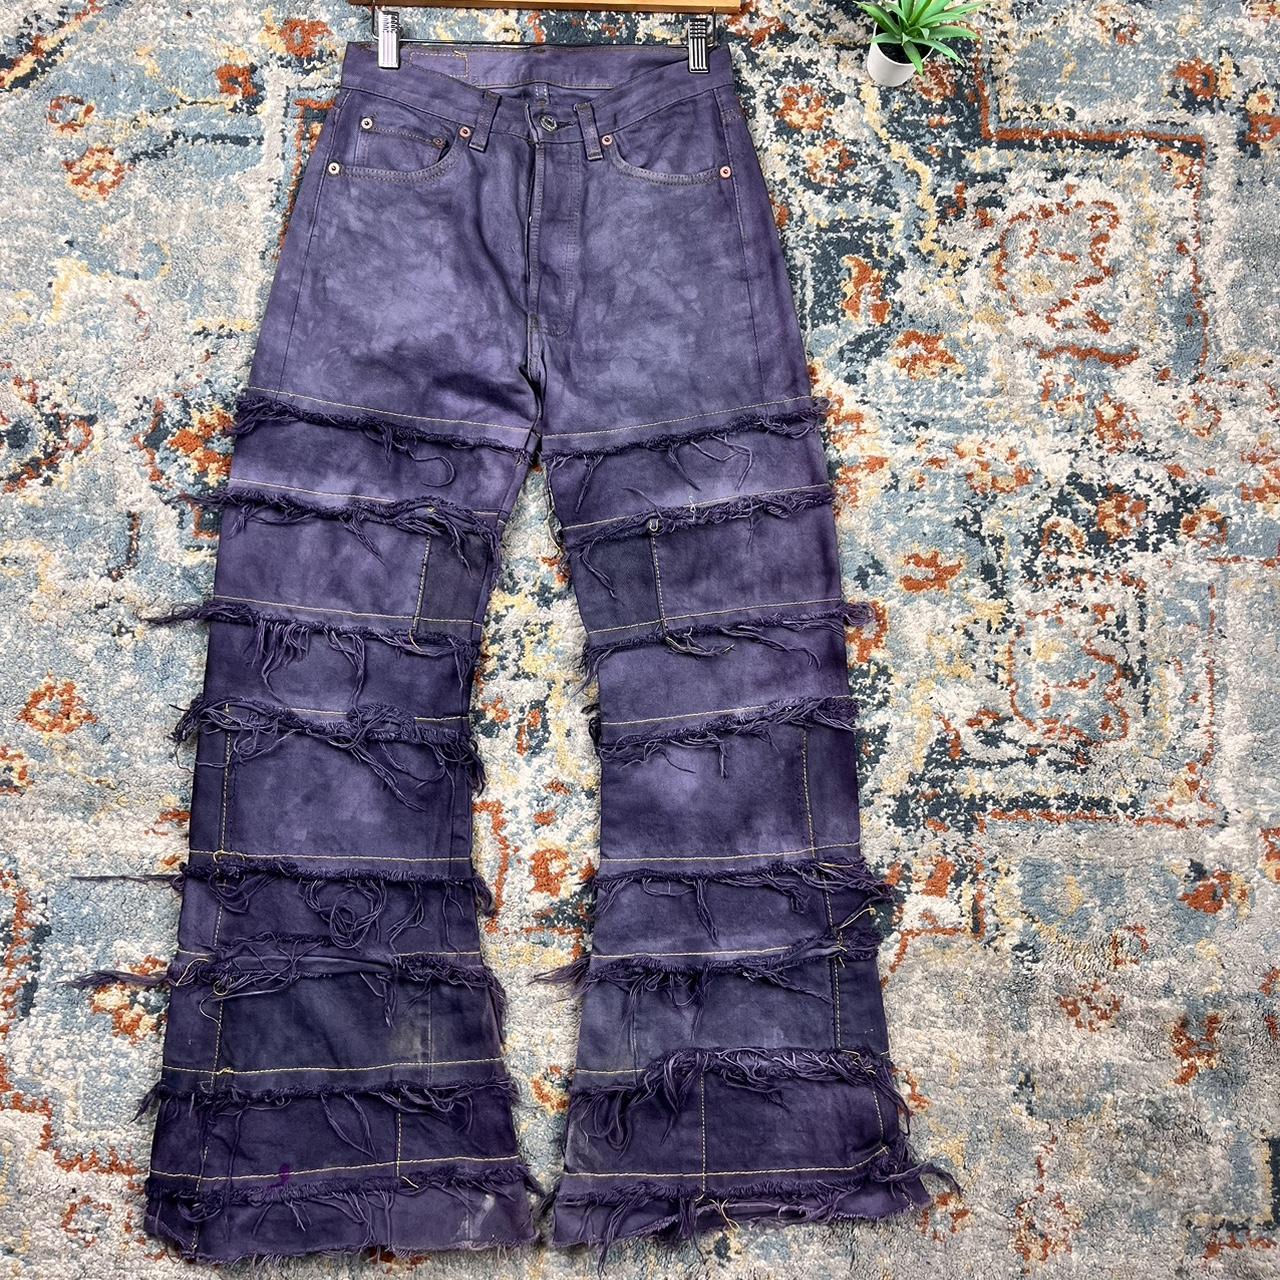 Vintage Japanese Brand Hagi Style Jeans, 14x29